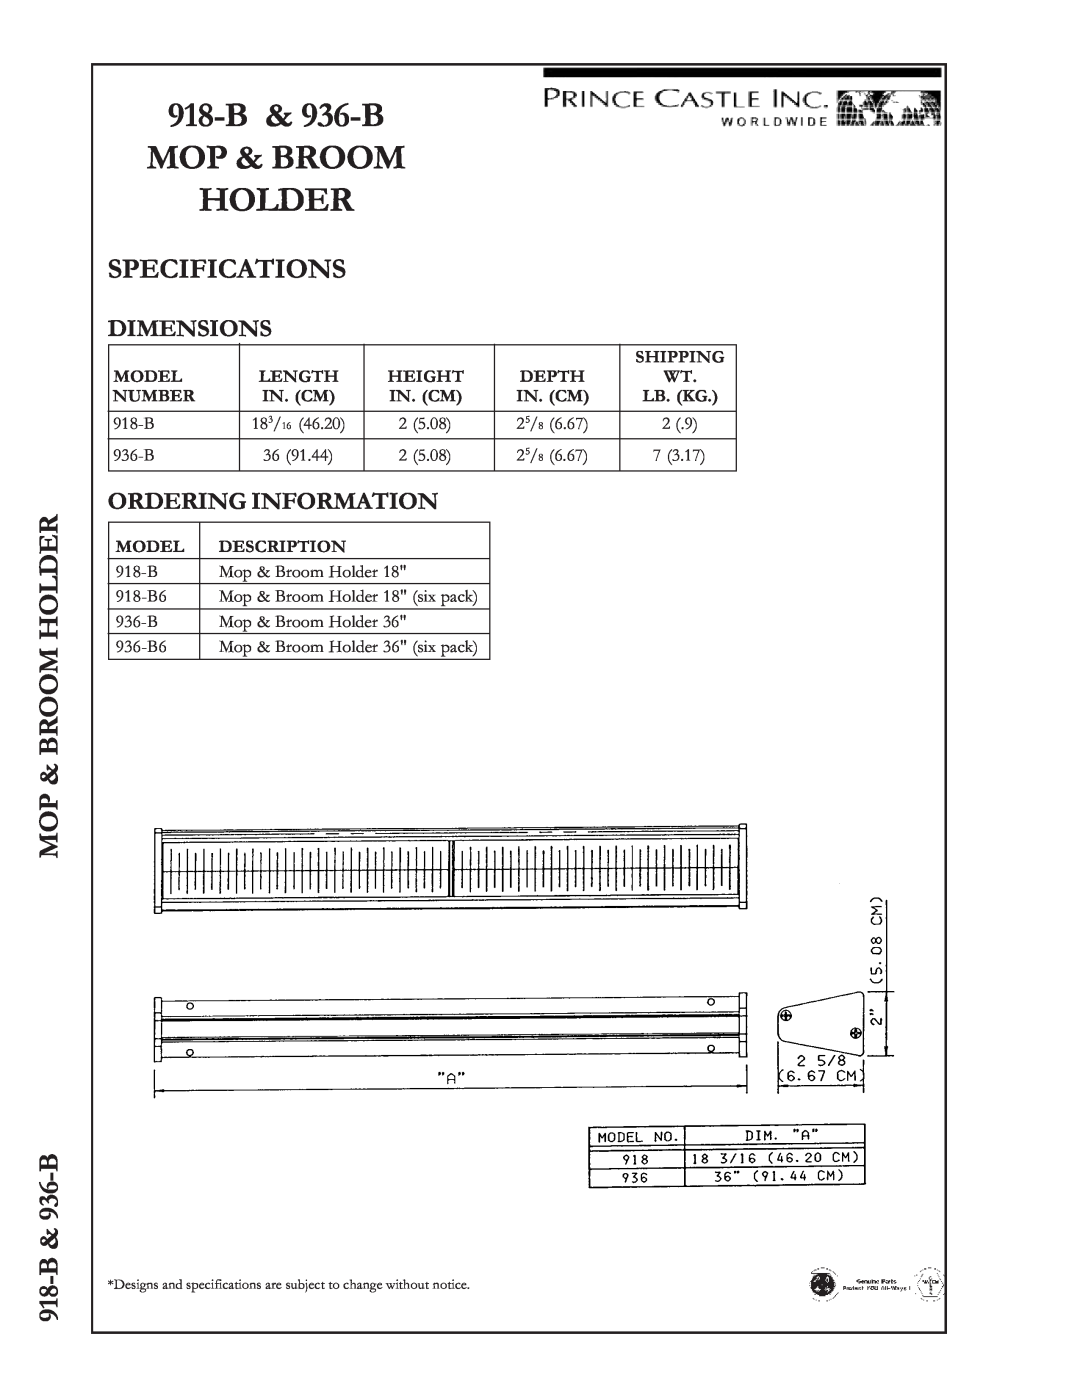 Prince Castle manual MOP & BROOM HOLDER 918-B& 936-B, Specifications, 918-B& 936-B MOP & BROOM HOLDER, Dimensions 